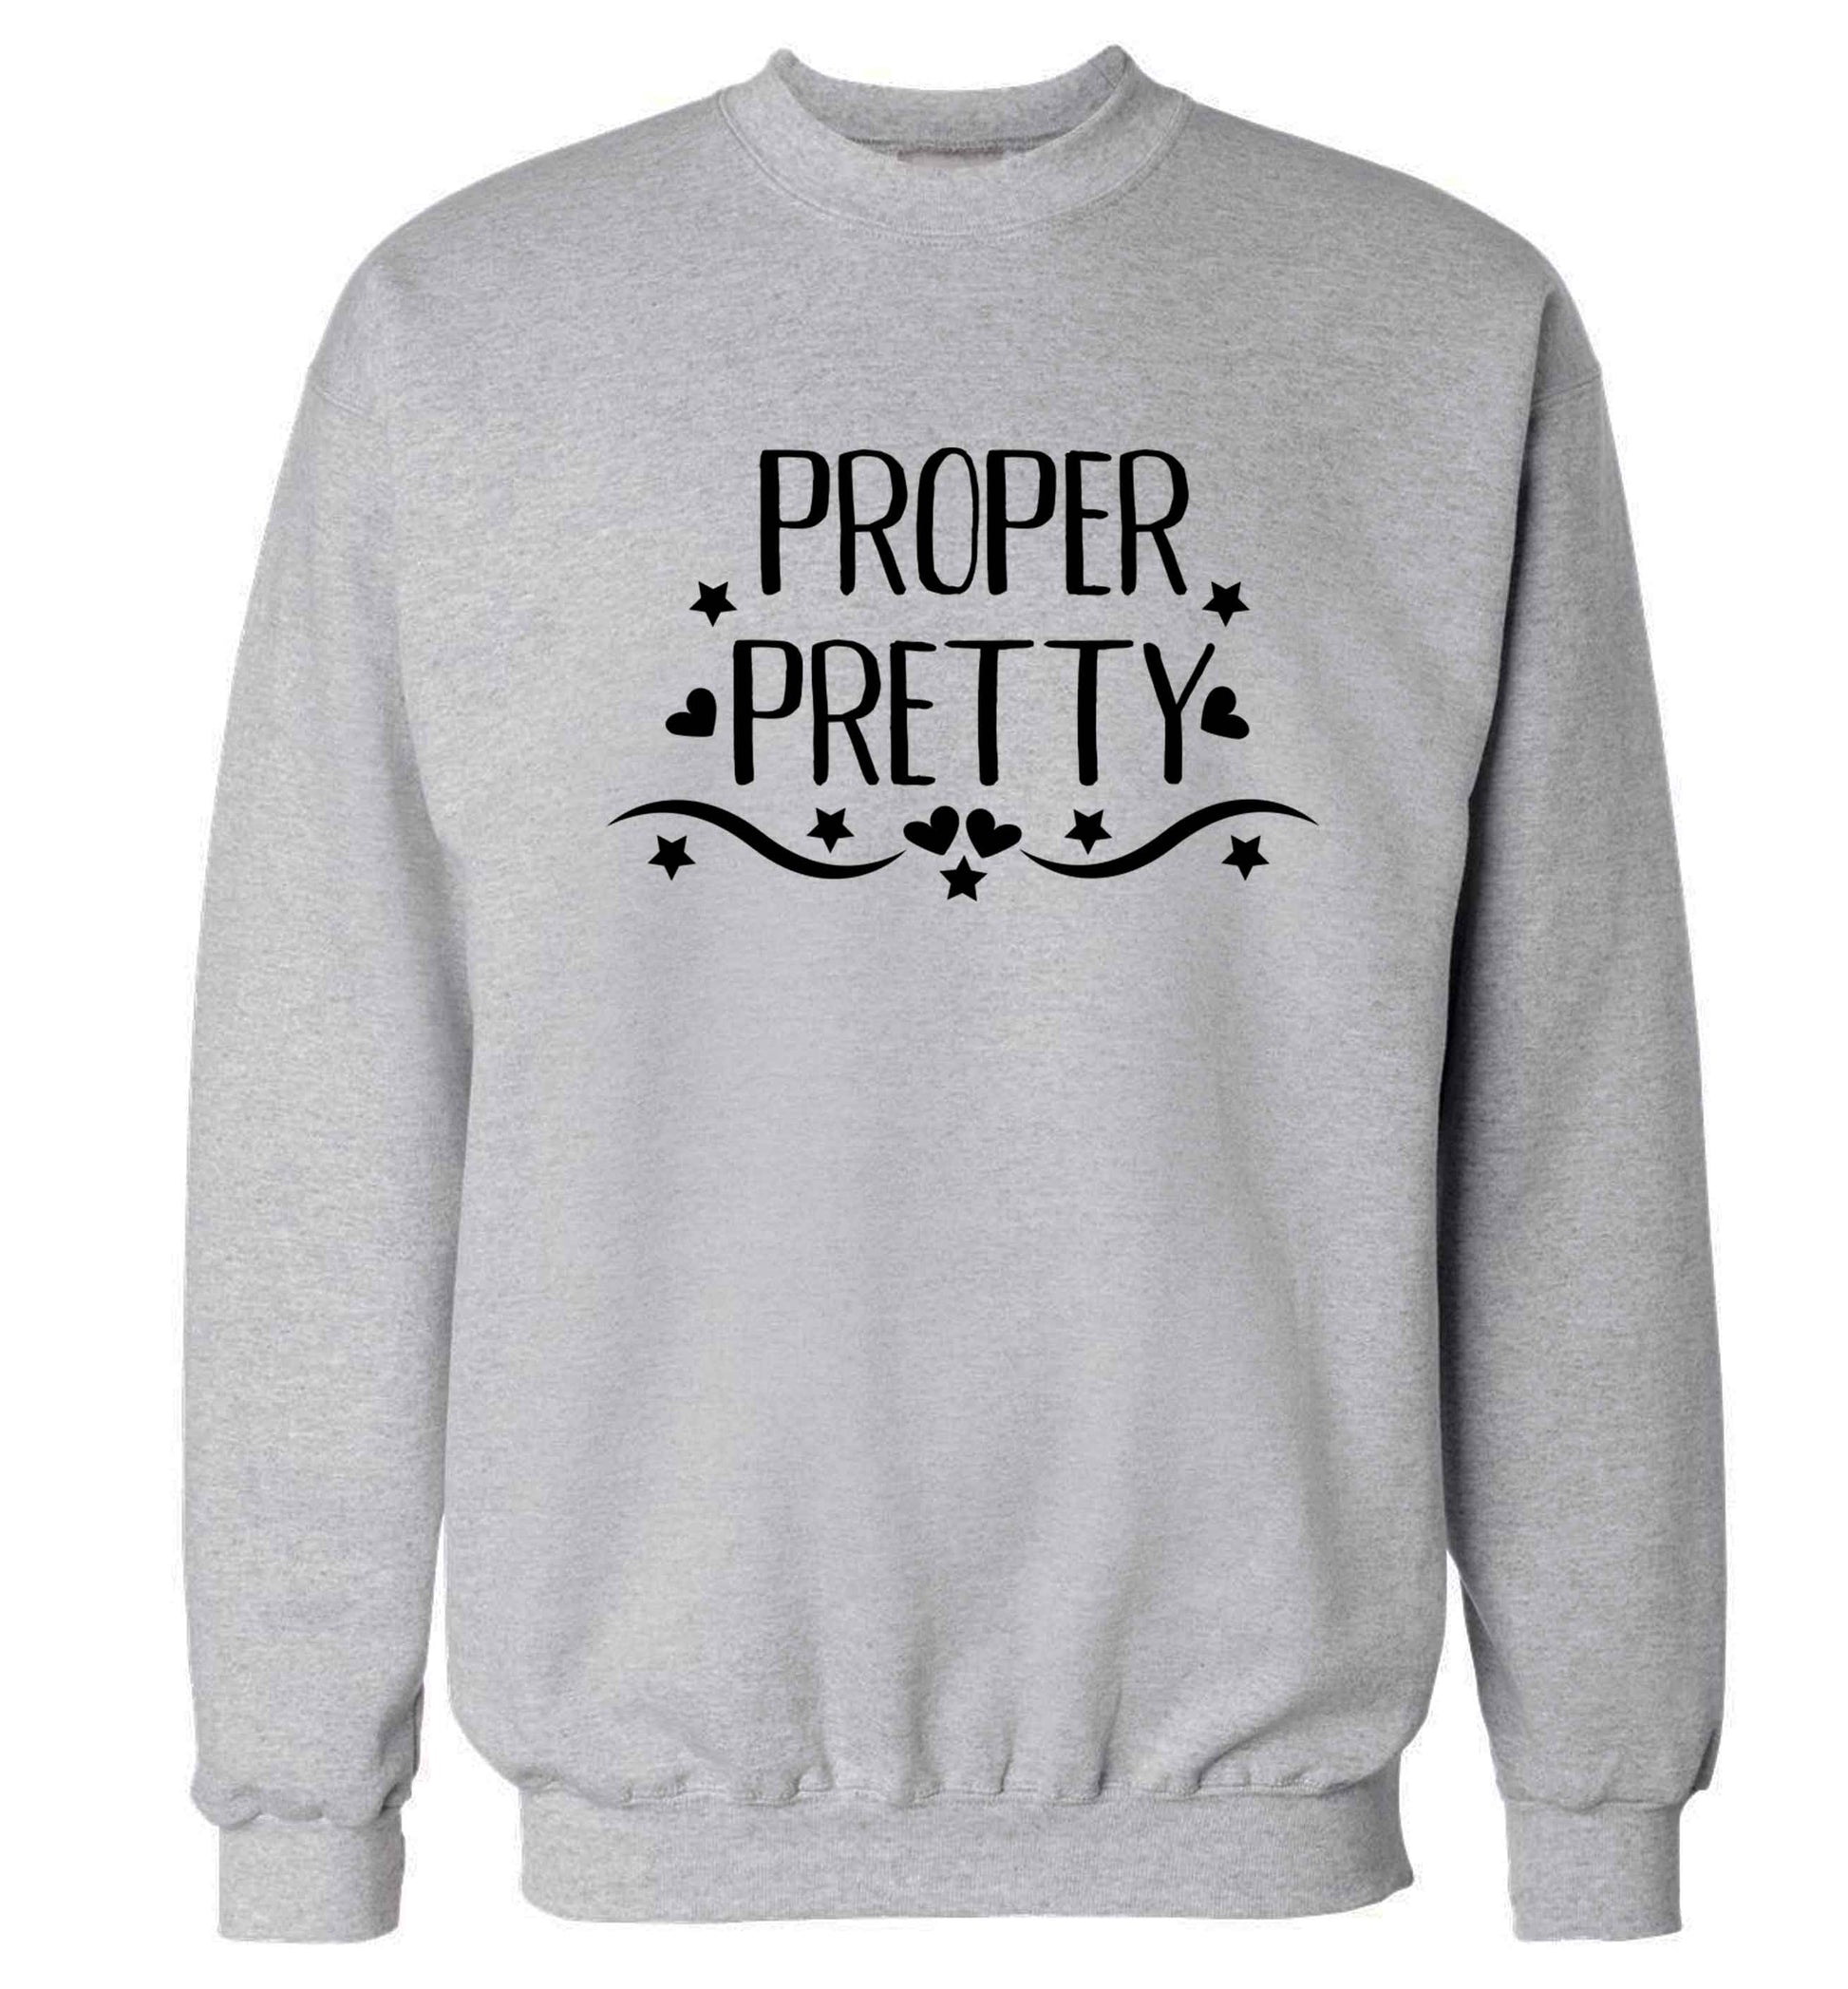 Proper pretty Adult's unisex grey Sweater 2XL